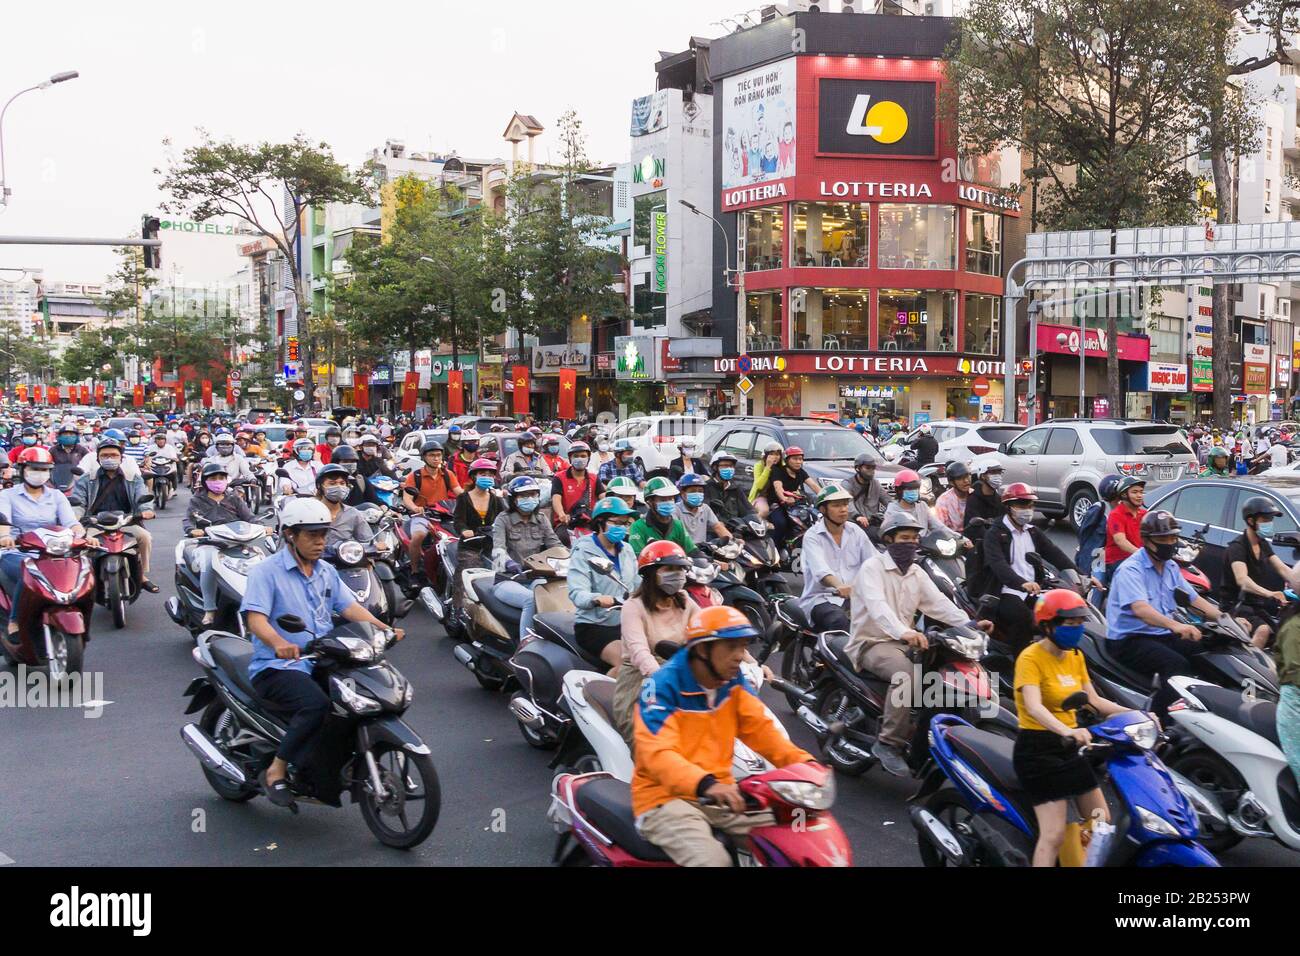 Saigon (Ho Chi Minh City) Vietnam - Hundreds of motorbikes on a street of Saigon during the rush hour. Vietnam, Southeast Asia. Stock Photo